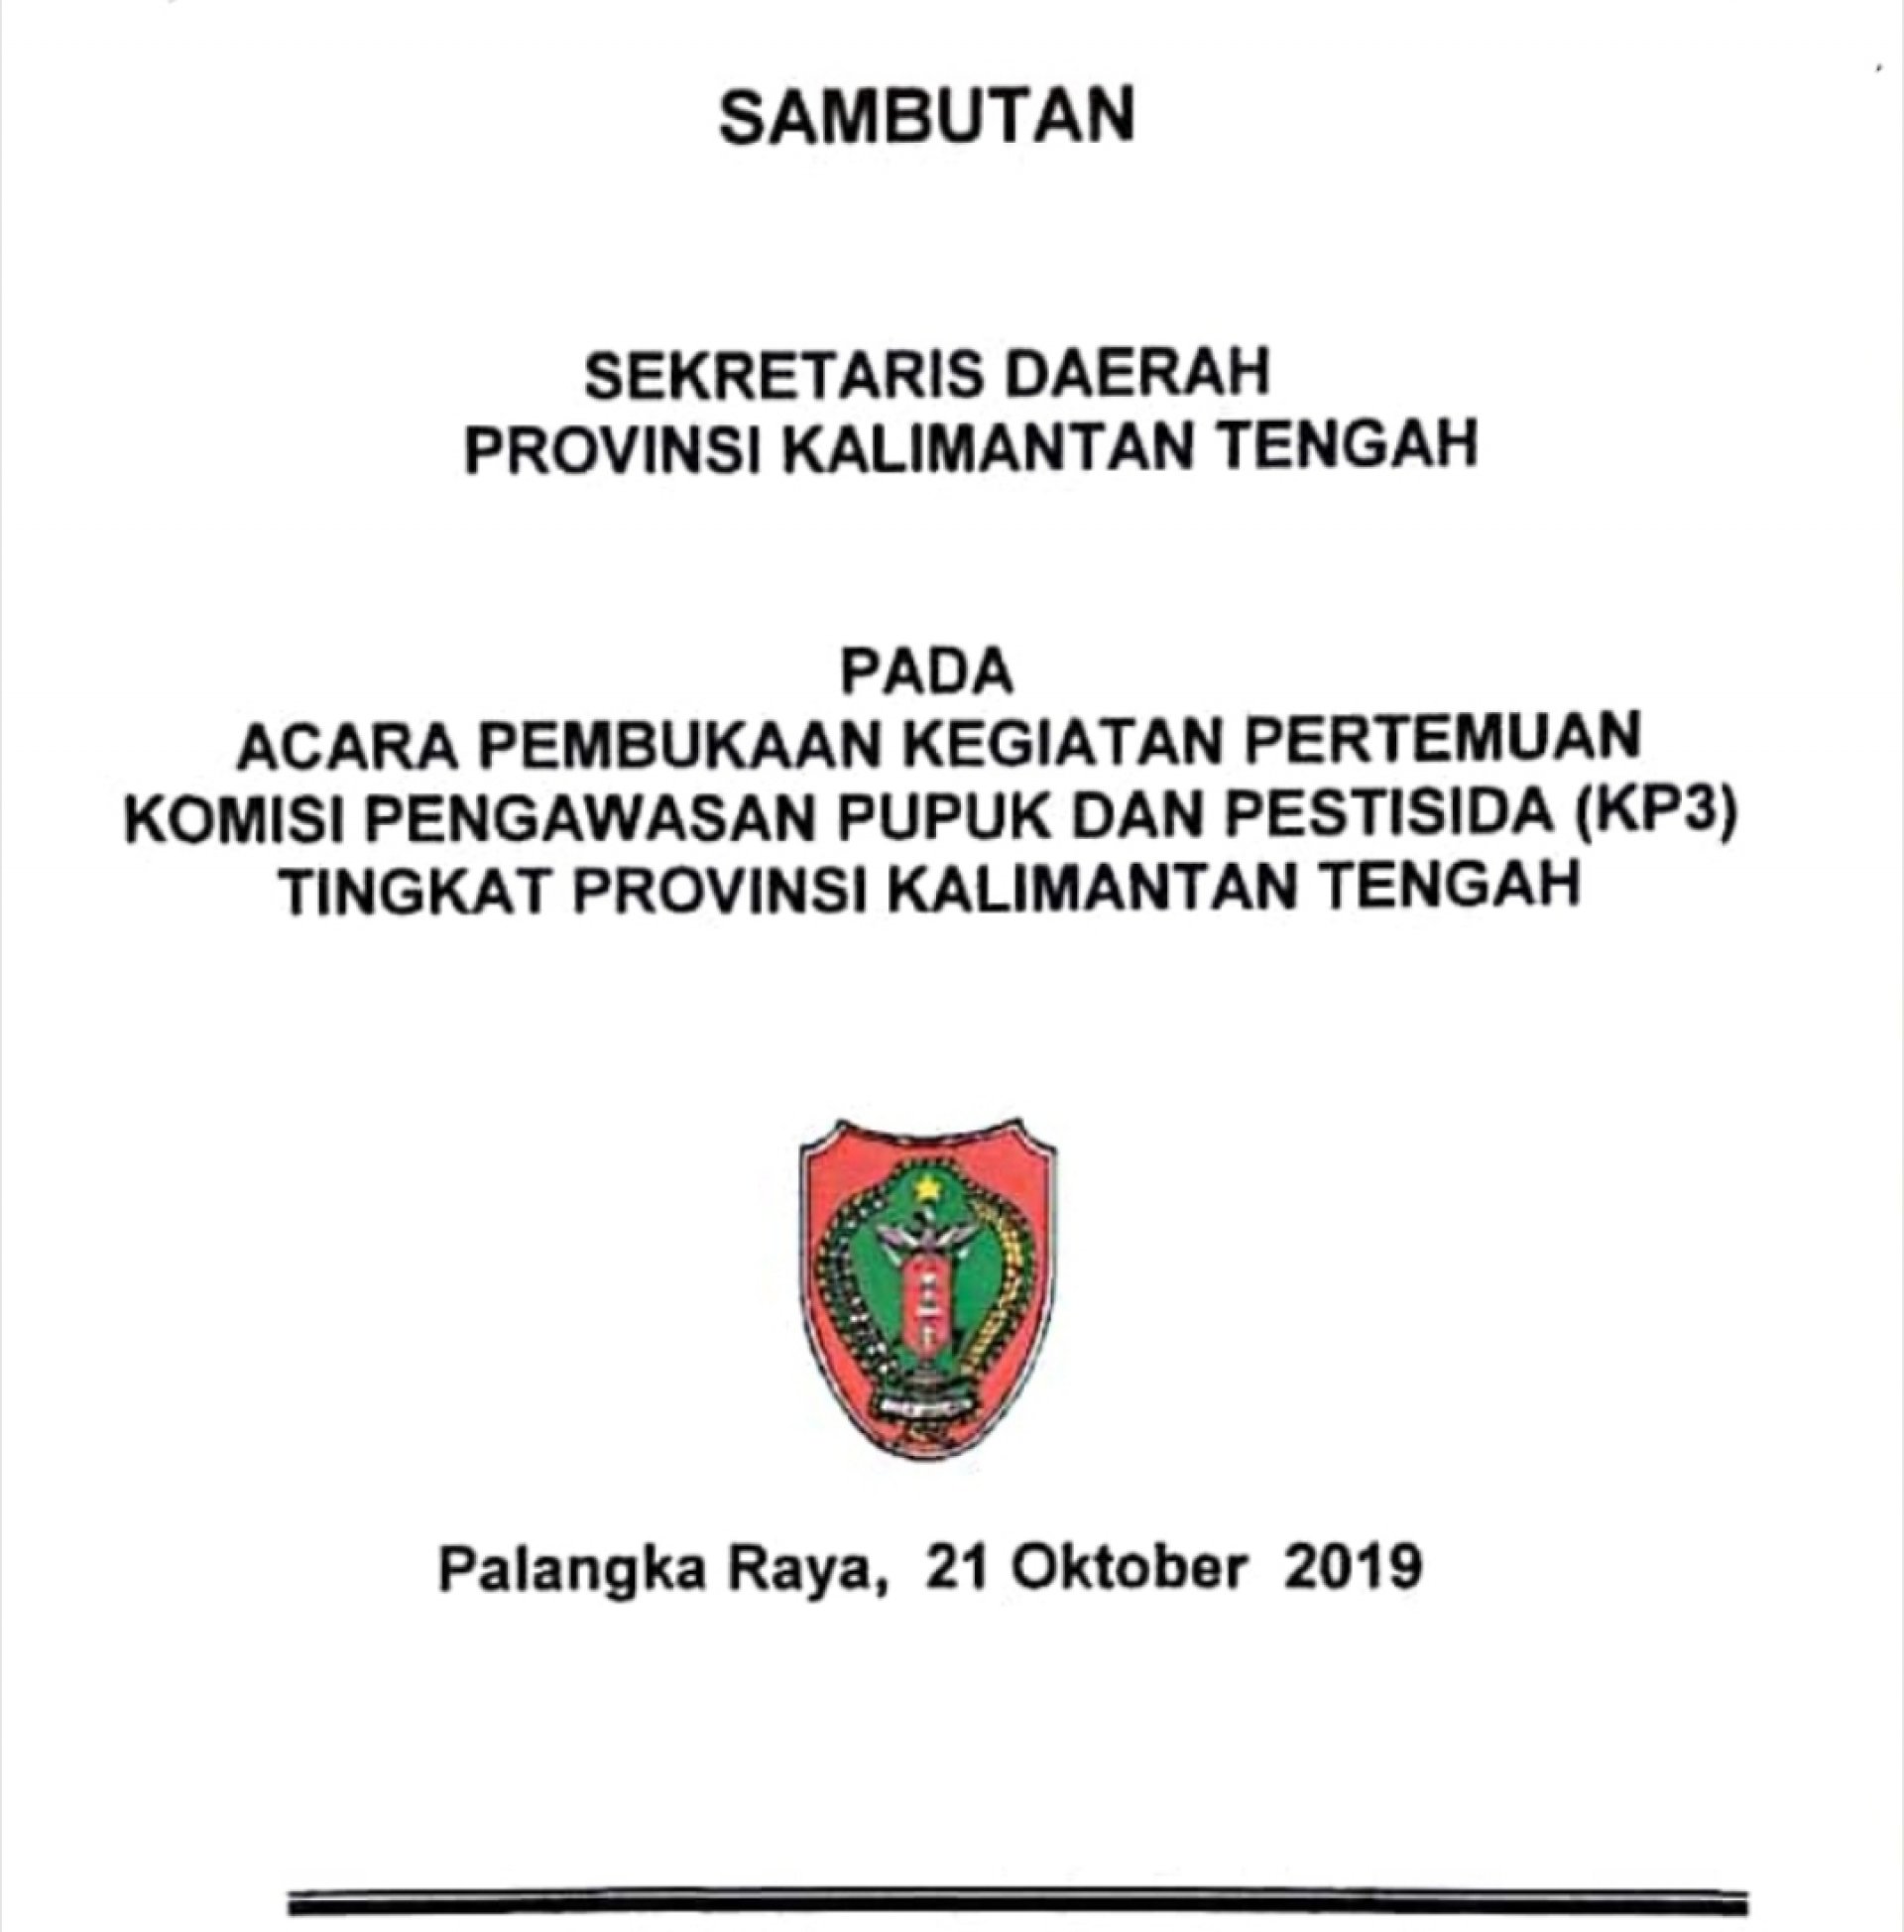 Sambutan Sekretaris Daerah pada Pertemuan Komisi Pengawasan Pupuk dan Pestisida (KP3) Tahun 2019